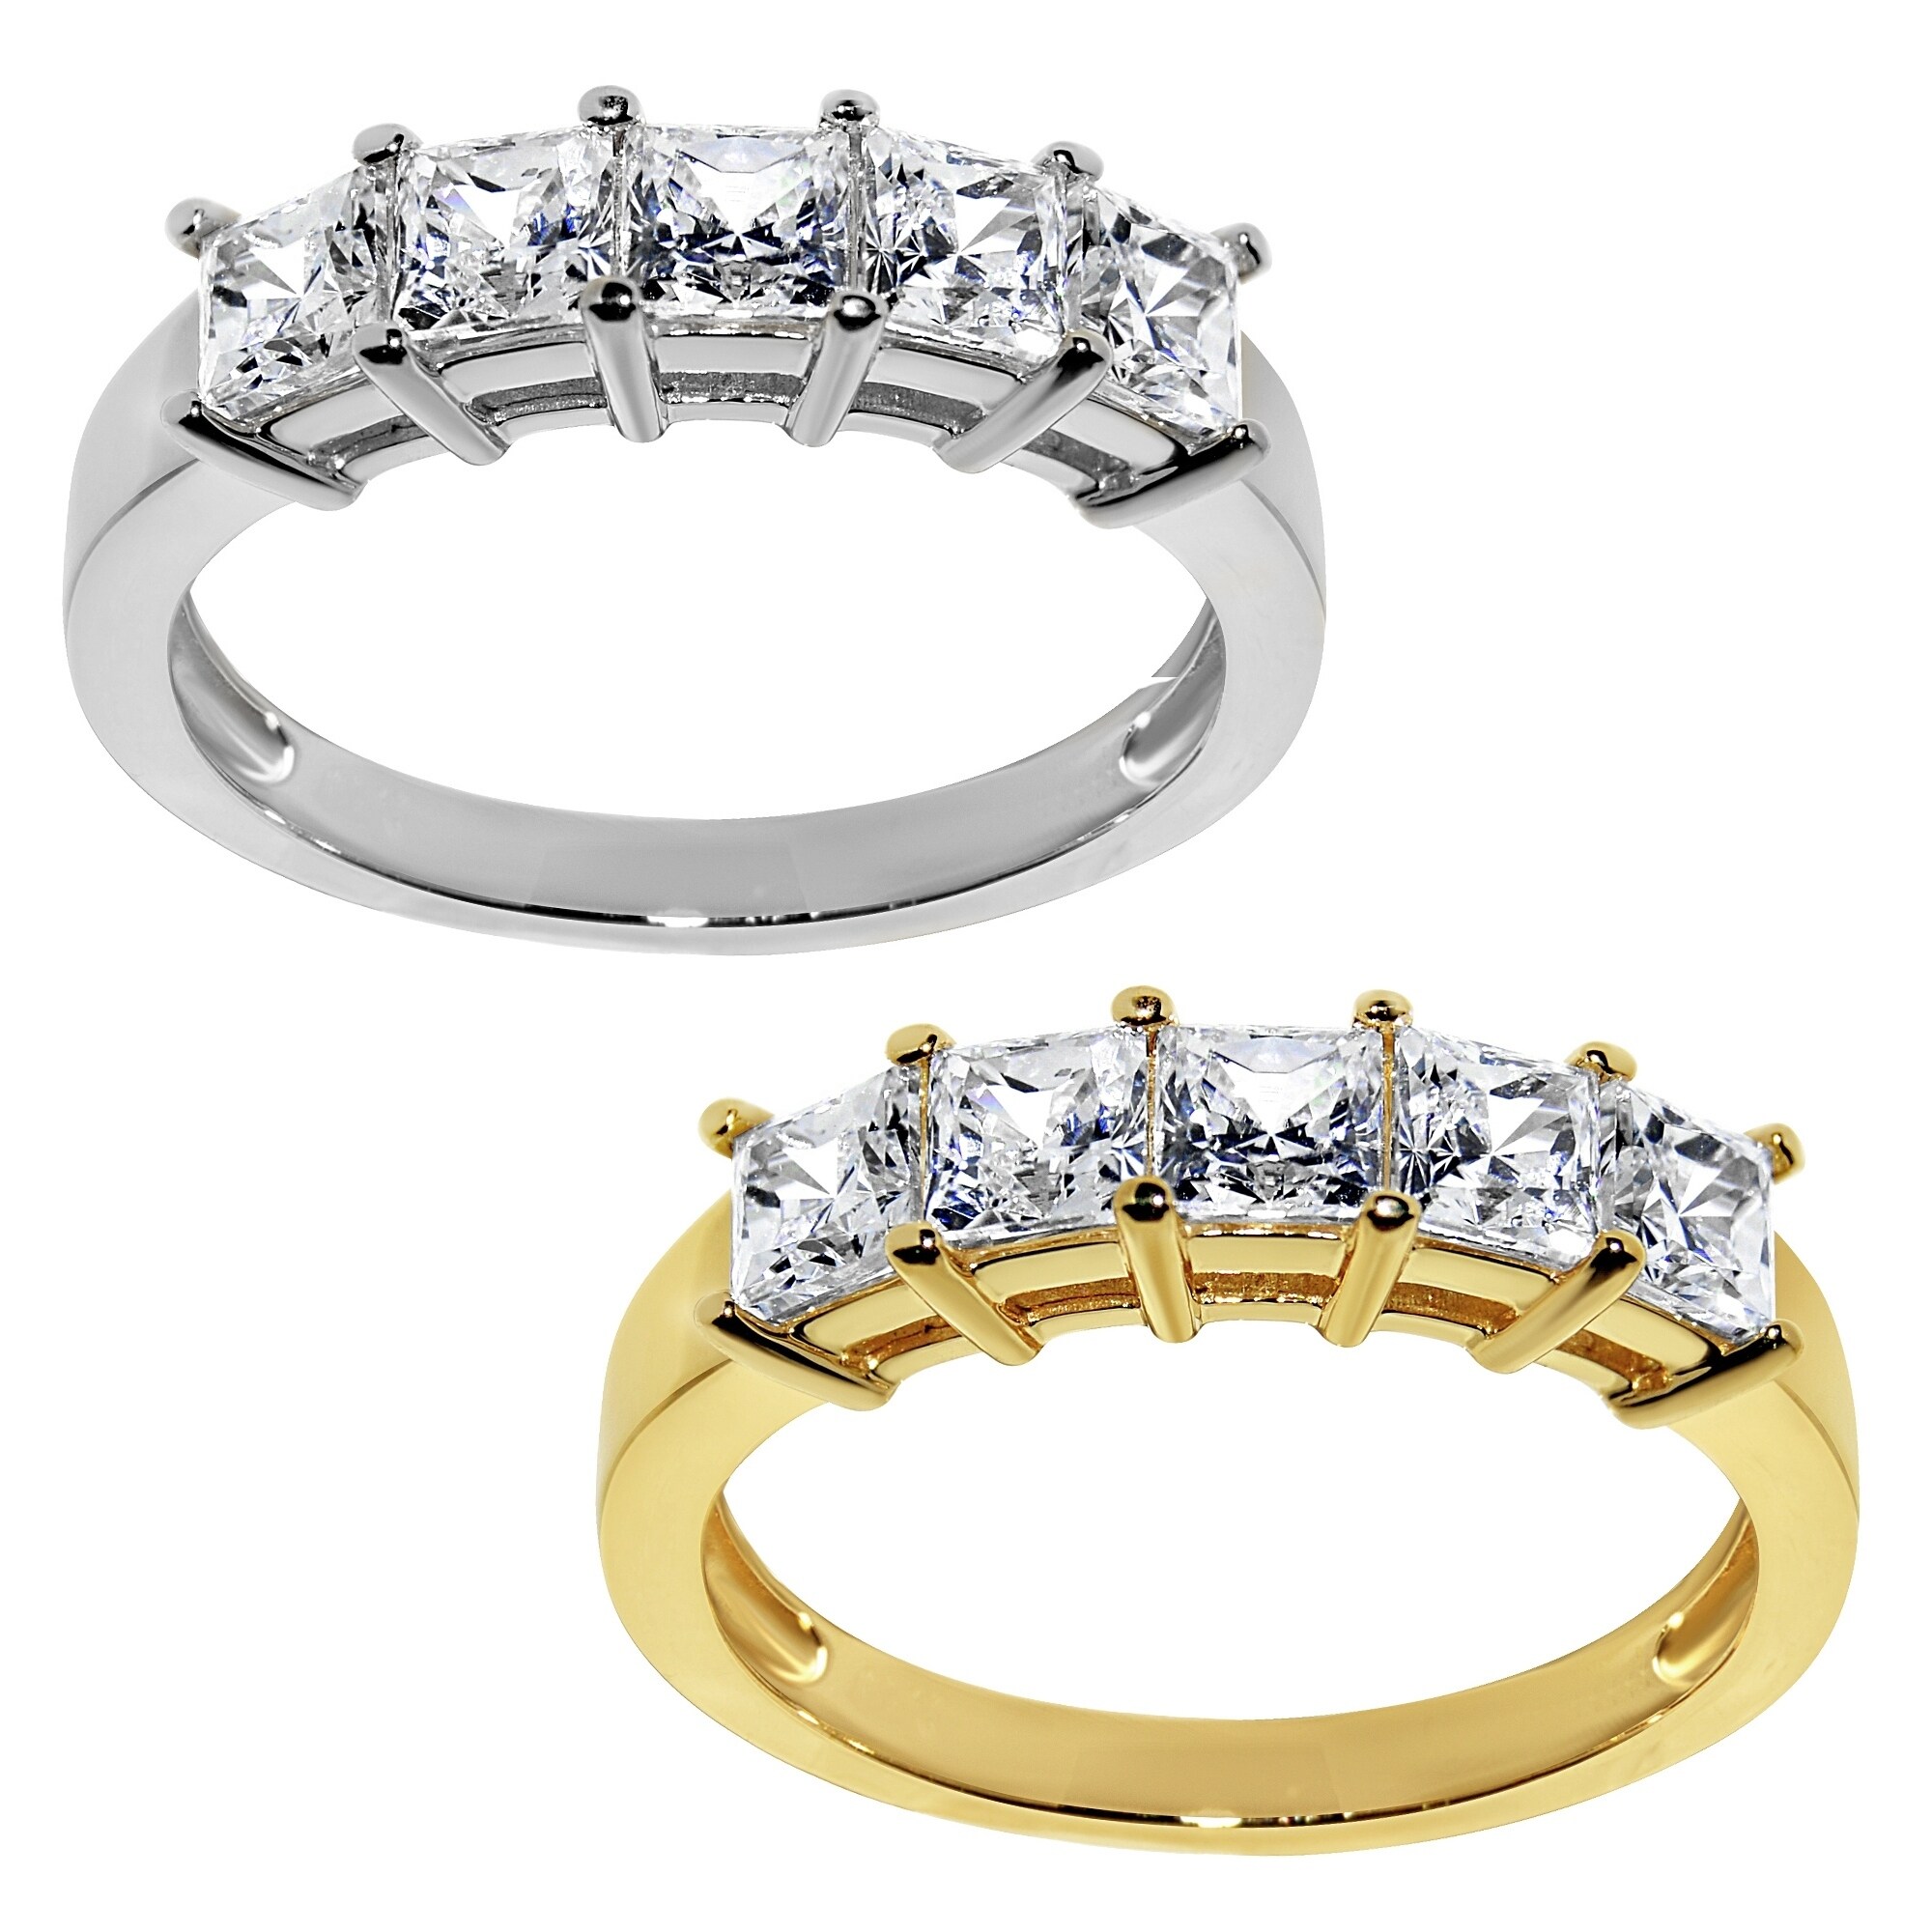 14K Yellow Gold Princess-cut Channel Set CZ Cubic Zirconia Ladies Wedding Band Ring